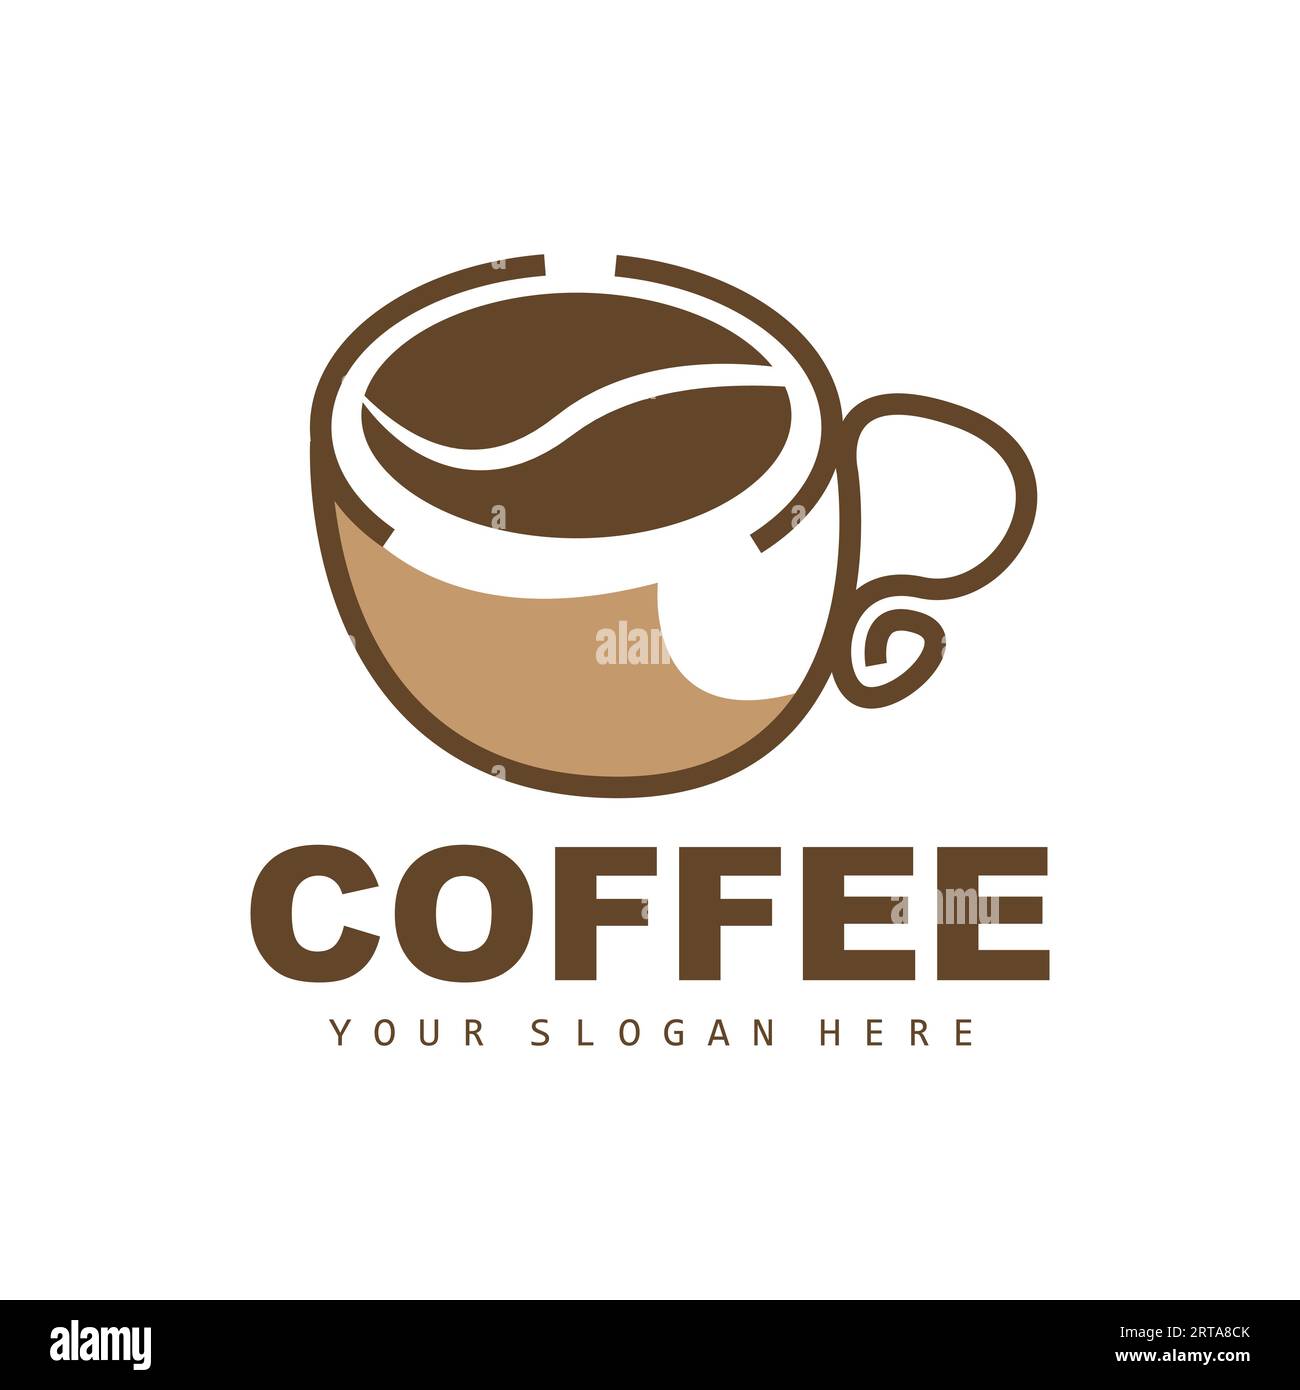 https://c8.alamy.com/comp/2RTA8CK/coffee-bean-drink-logo-design-in-brown-color-vector-illustration-2RTA8CK.jpg